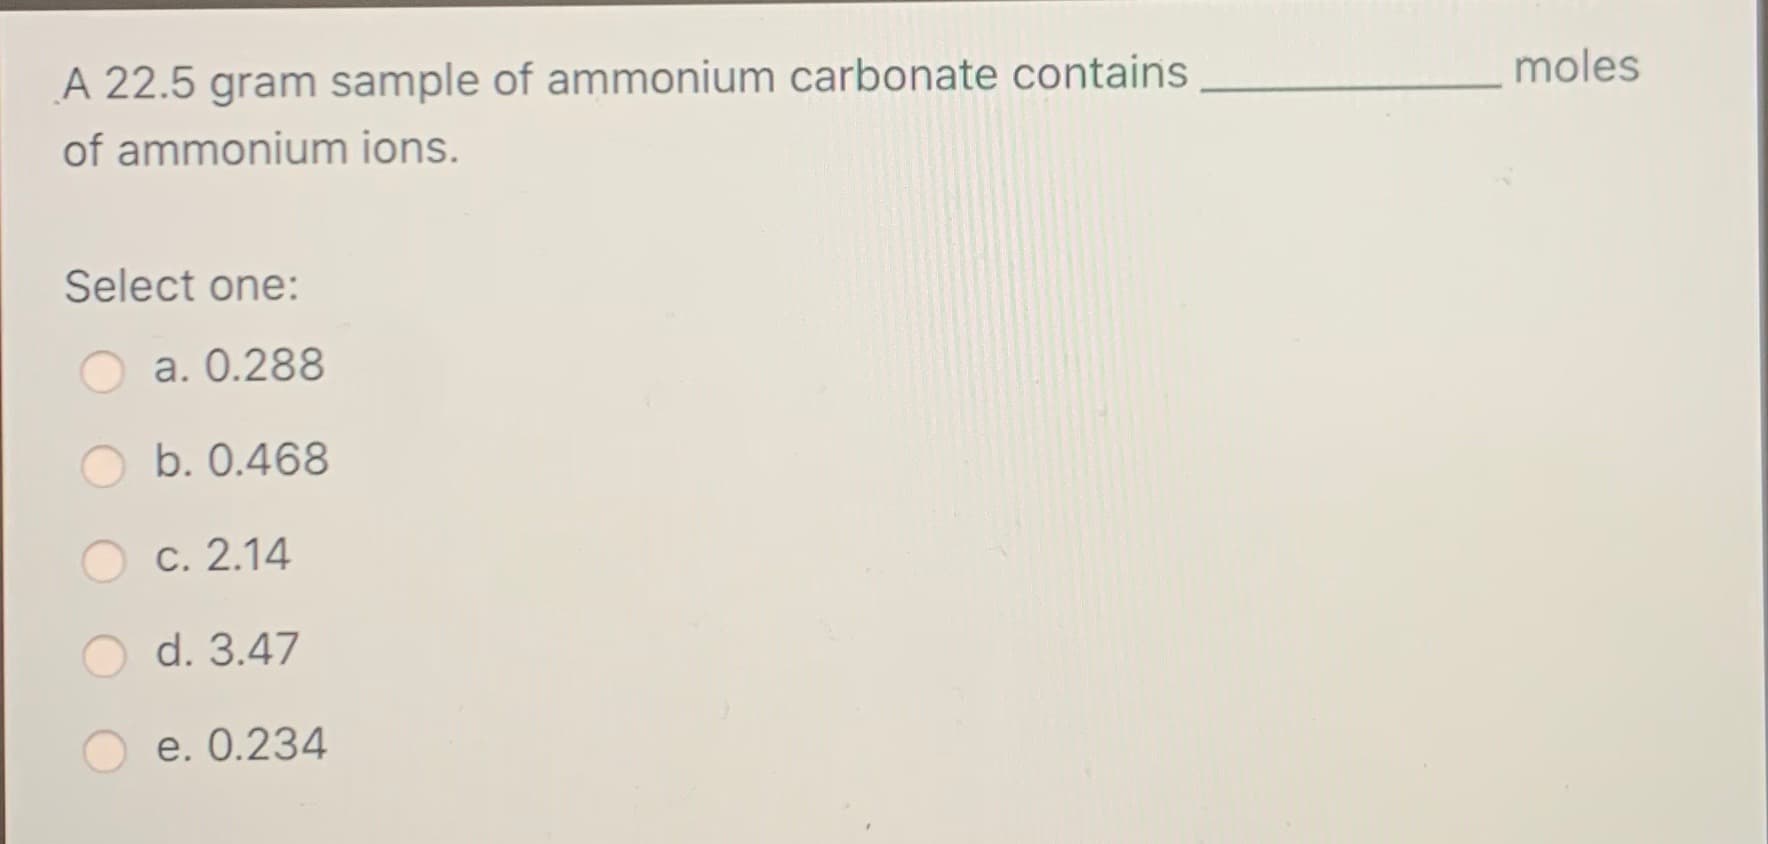 A 22.5 gram sample of ammonium carbonate contains
moles
of ammonium ions.
Select one:
a. 0.288
b. 0.468
c. 2.14
d. 3.47
